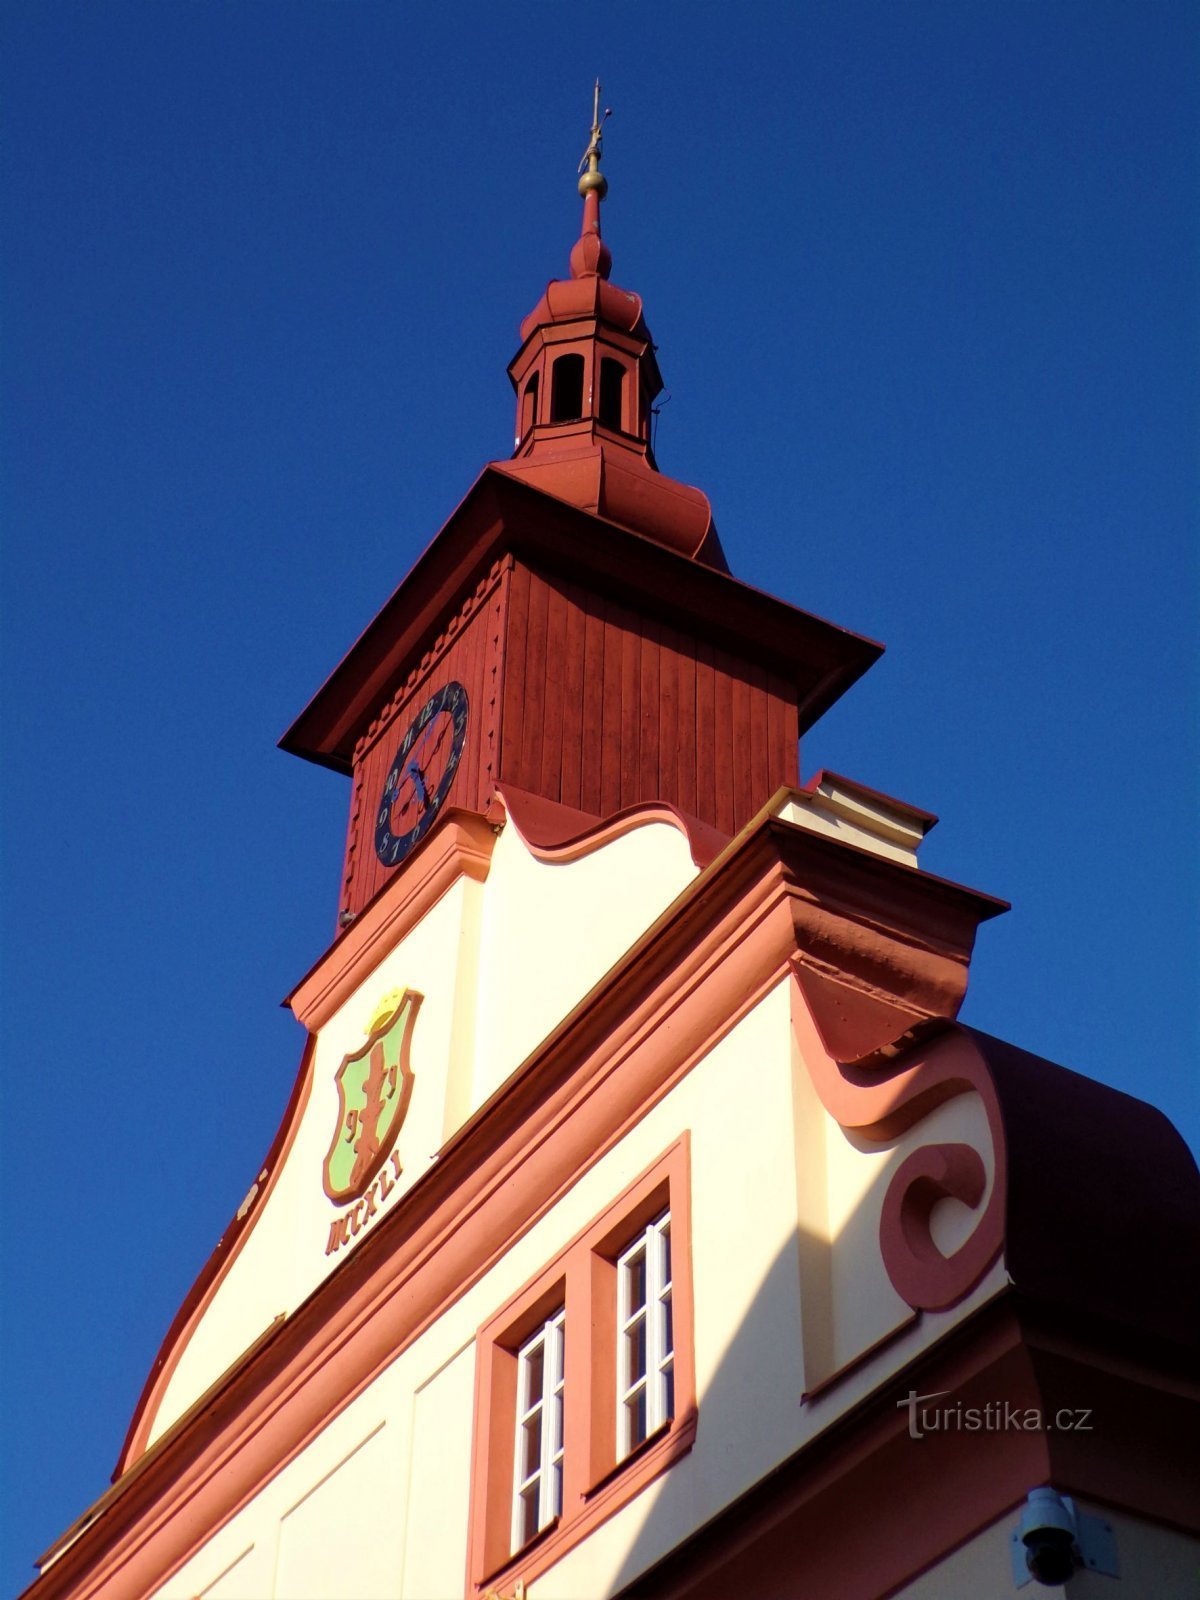 Tower of the old town hall No. 30 (Úpice, 8.9.2021/XNUMX/XNUMX)